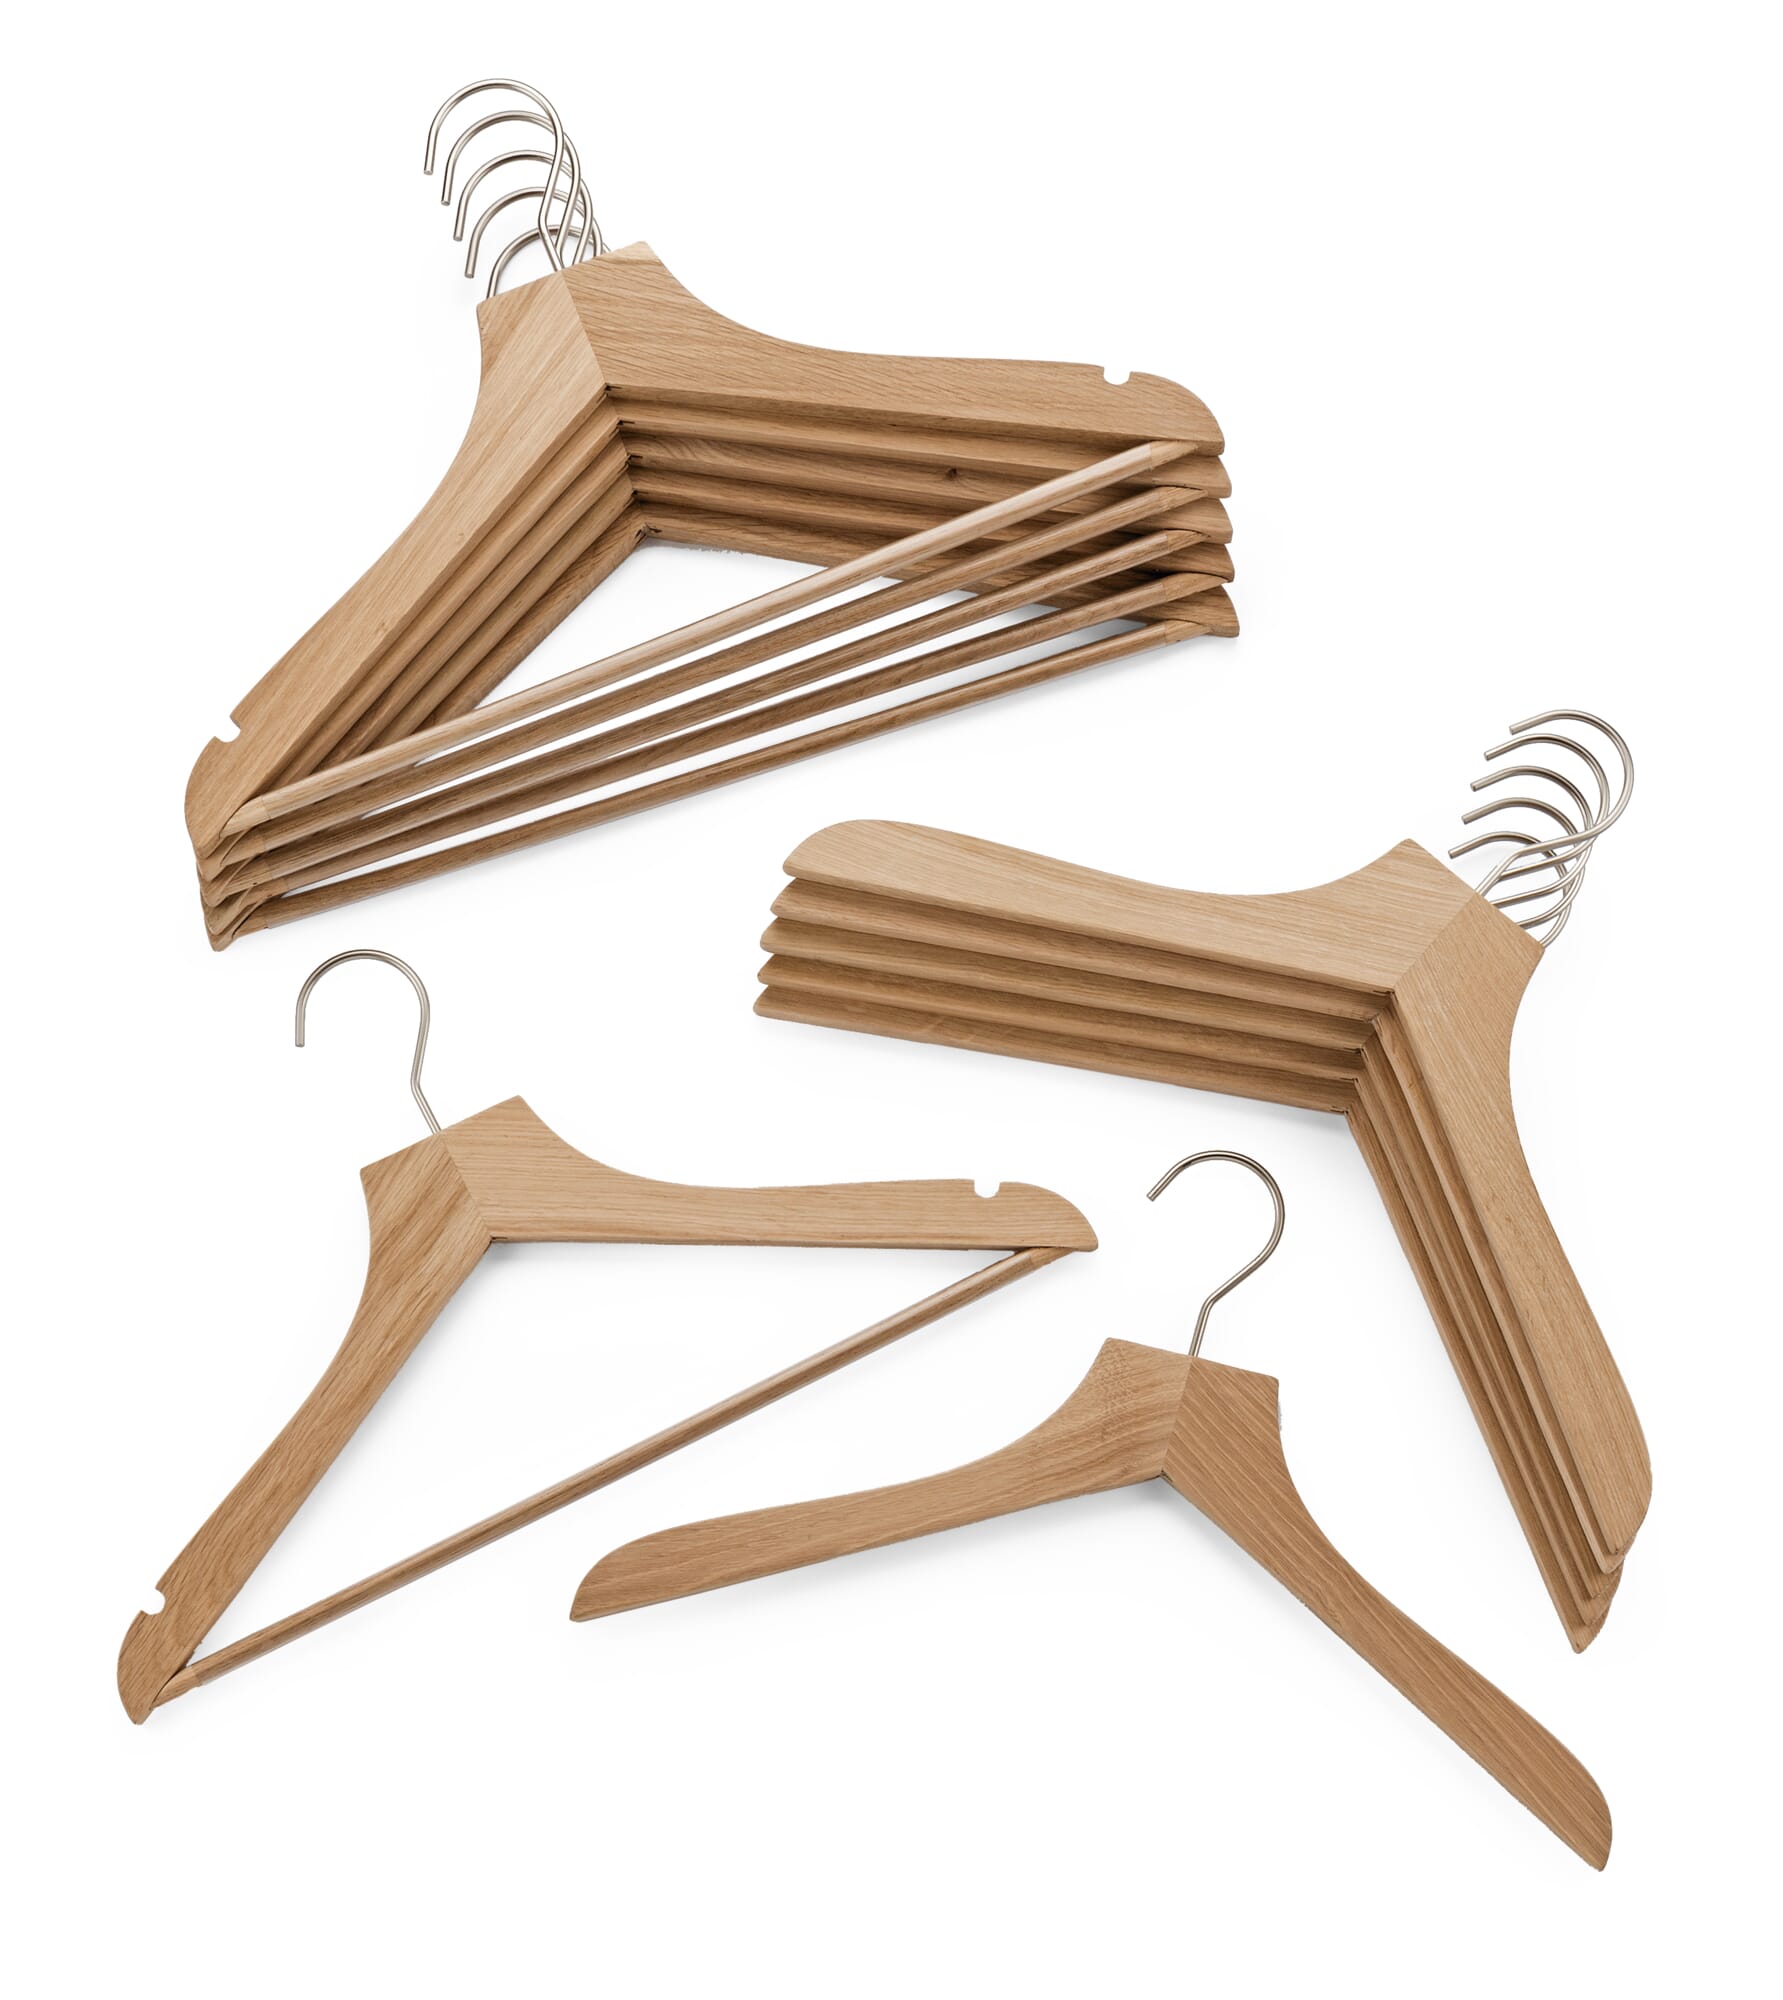 Clothes Hangers Noa 3 12 Items, Thin Wooden Hangers